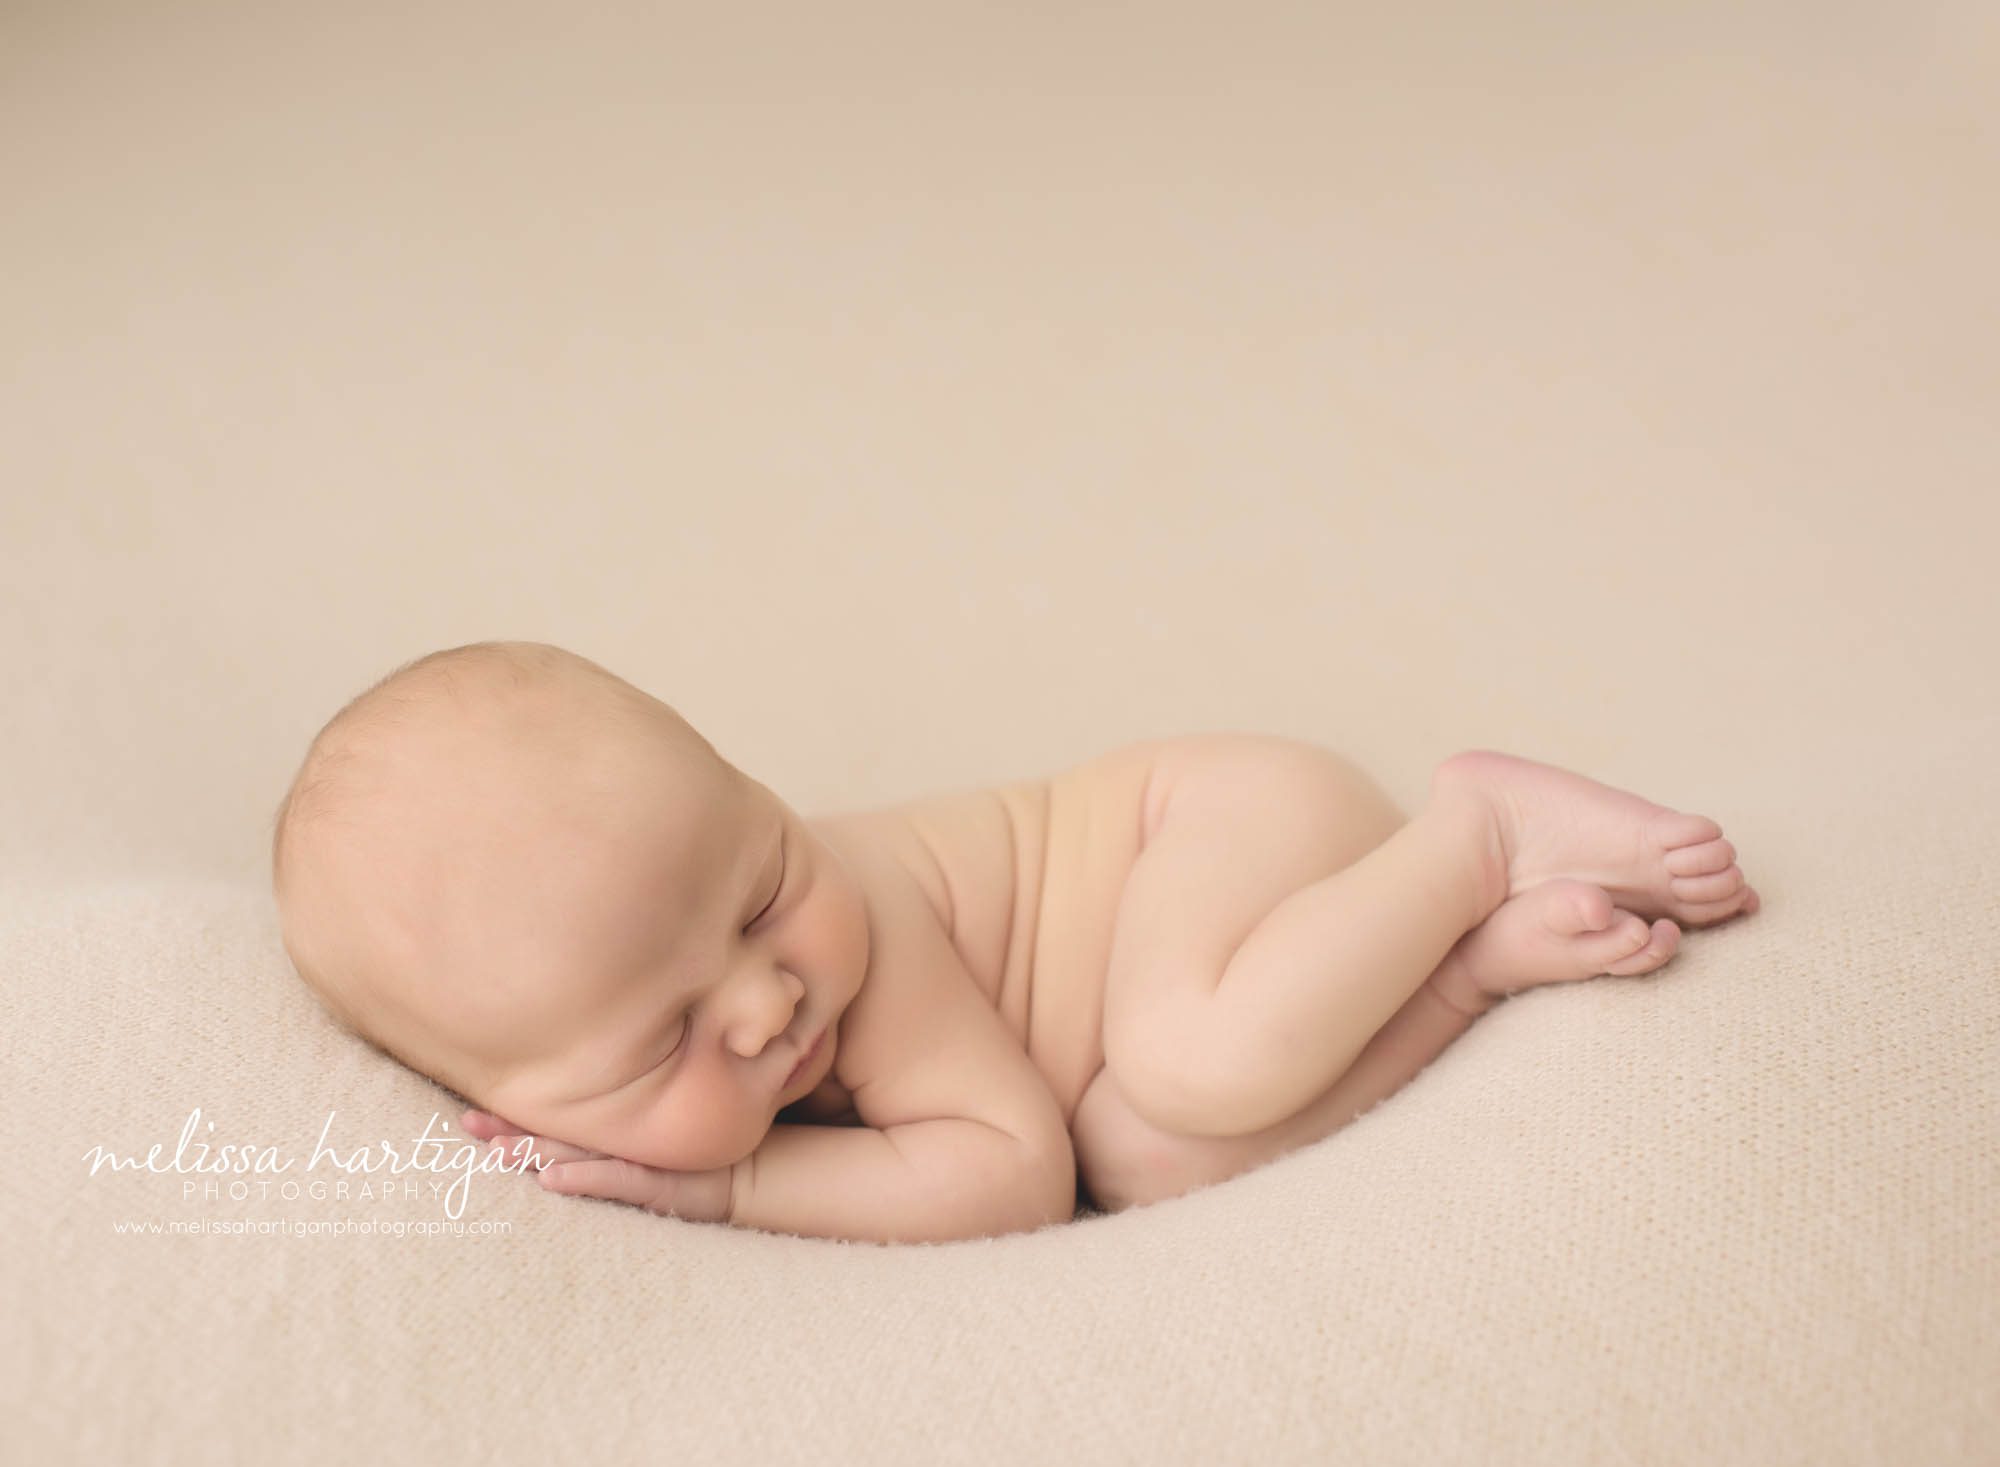 Melissa Hartigan Photography CT Newborn Photographer Braeden Newborn Session baby boy sleeping naked with head on hands side pose